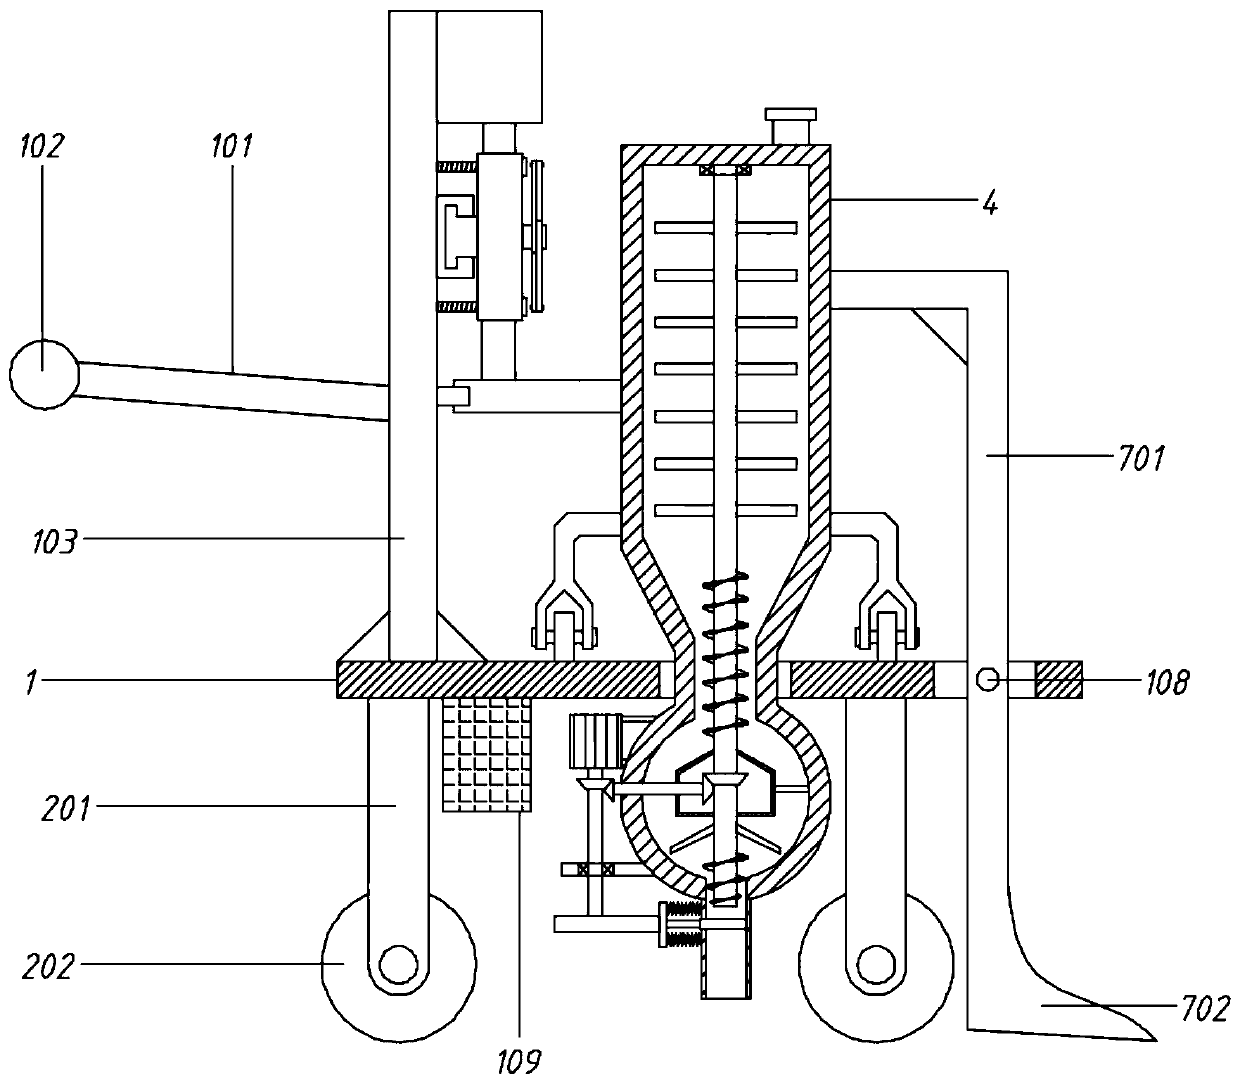 Agricultural sowing machine capable of adjusting sowing spacing